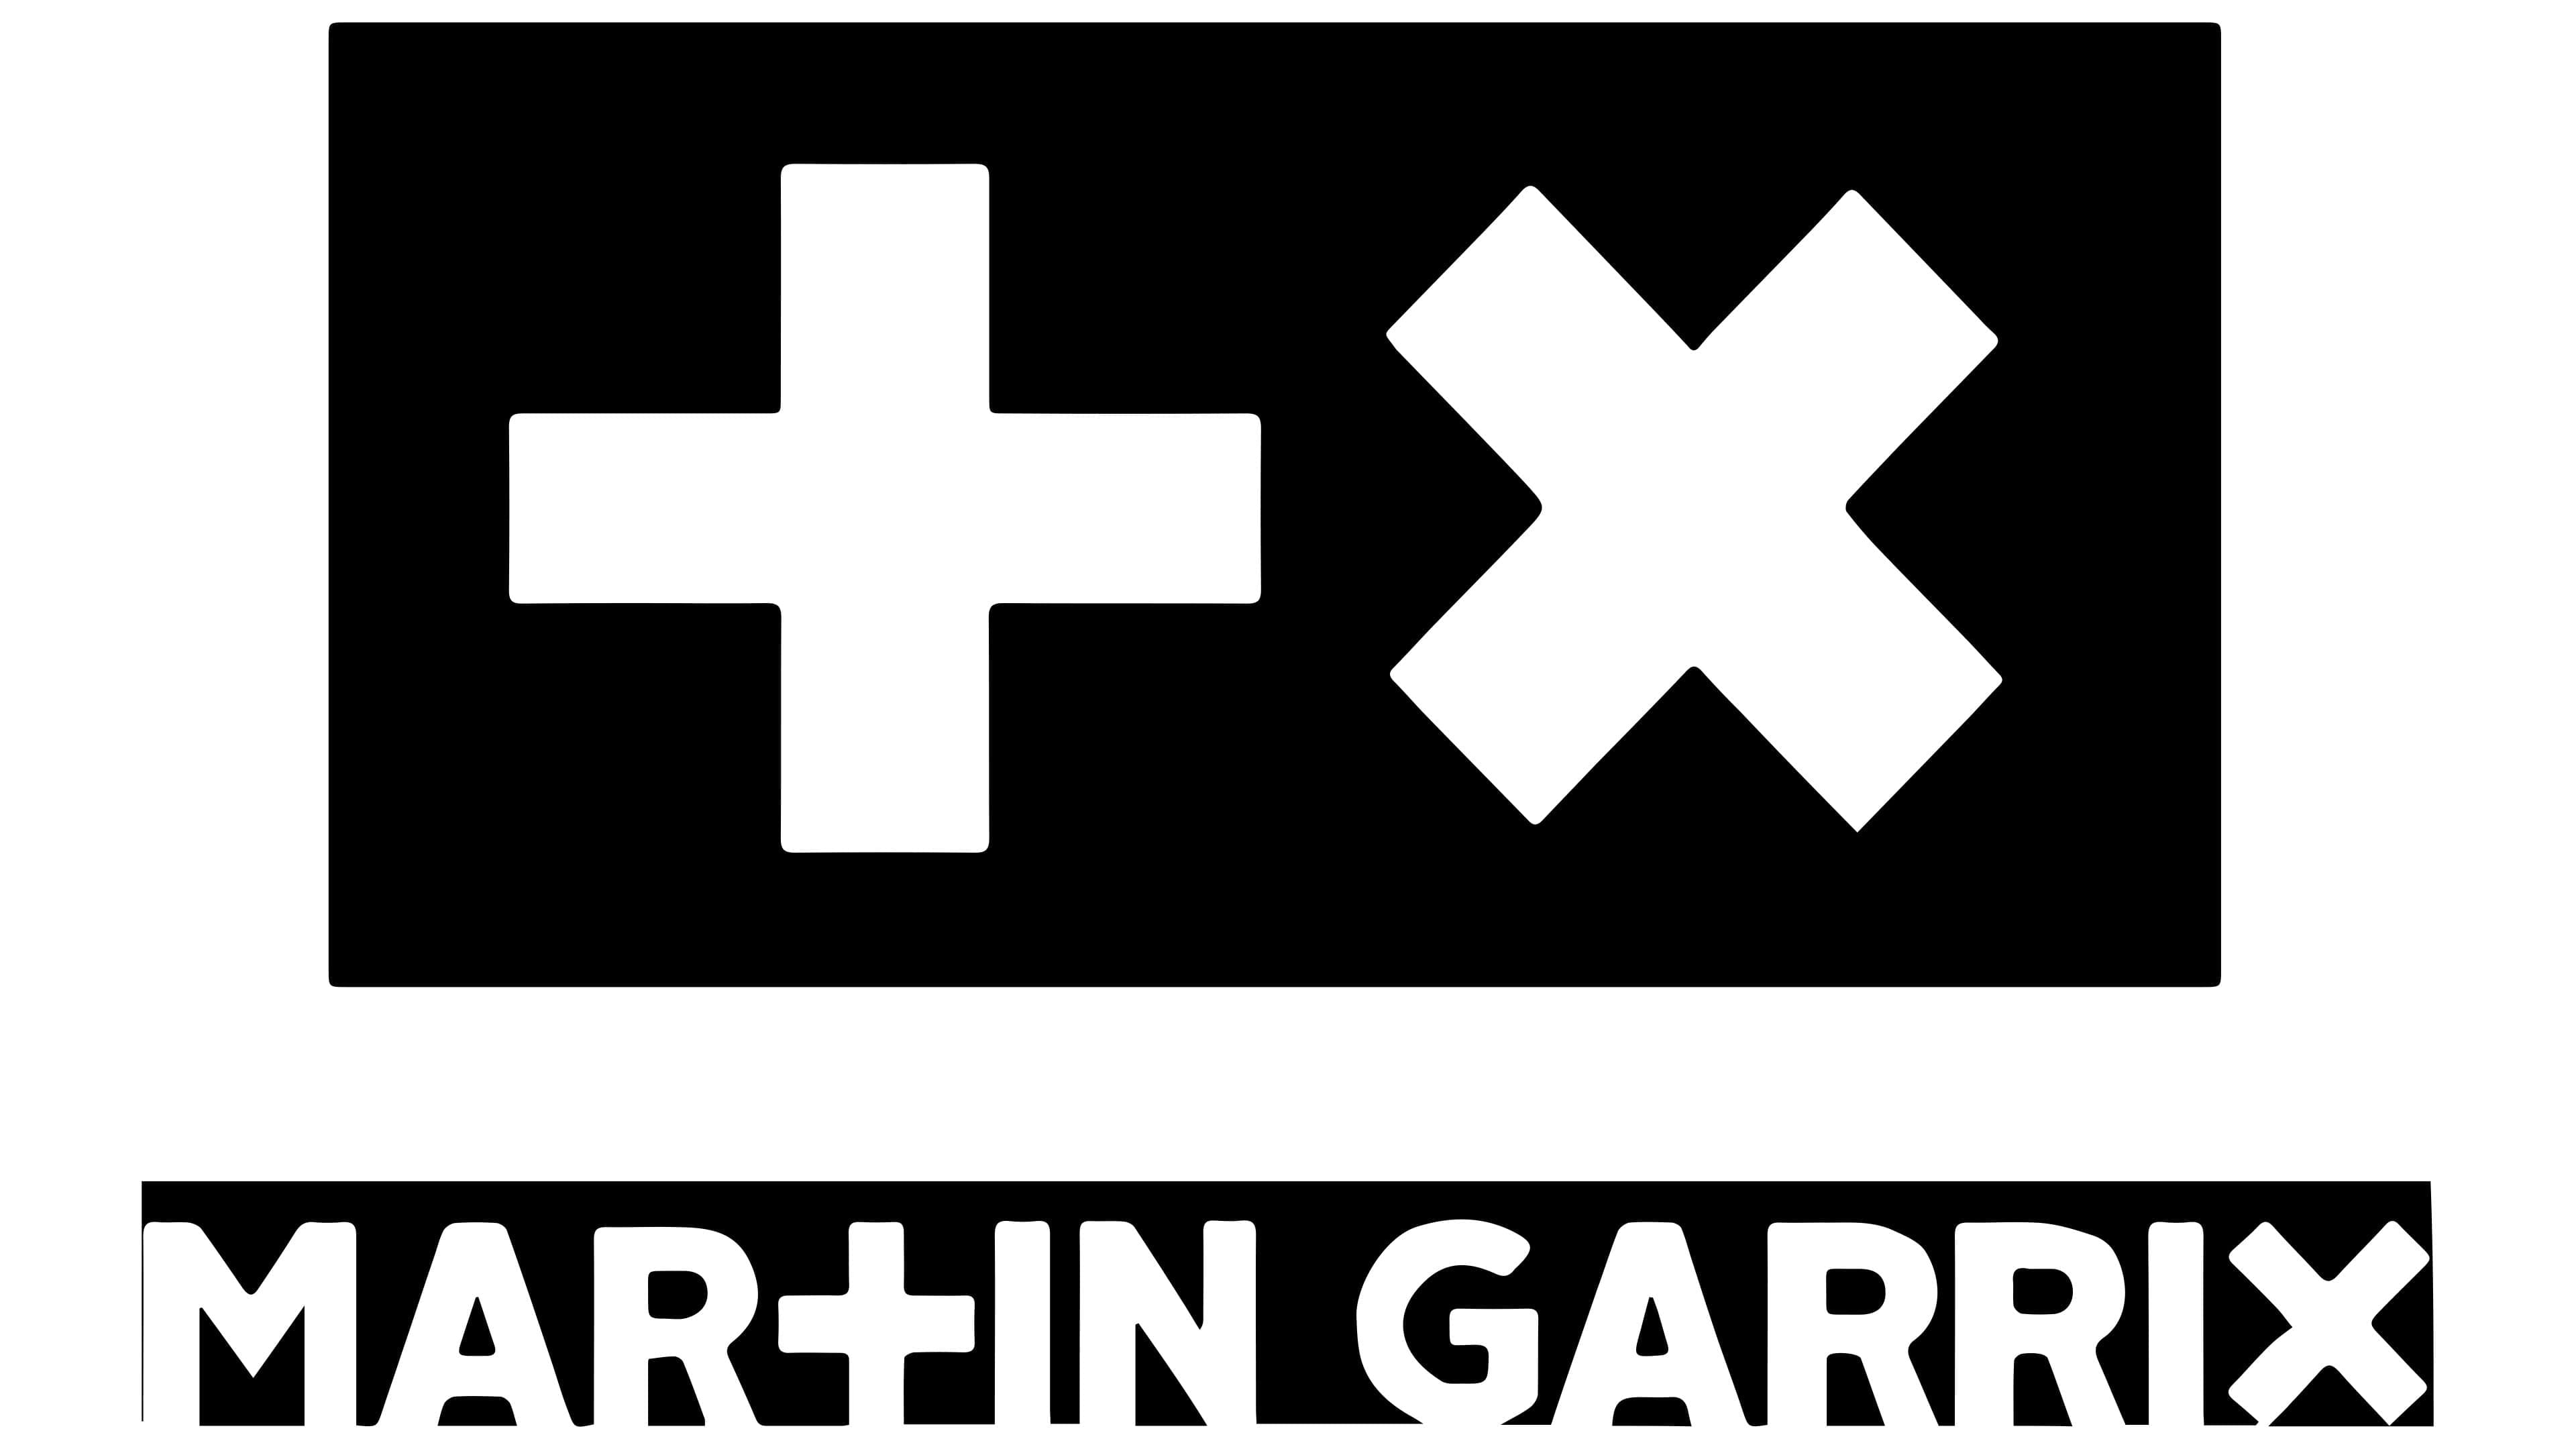 Martin Garrix Logo, symbol, meaning, history, PNG, brand